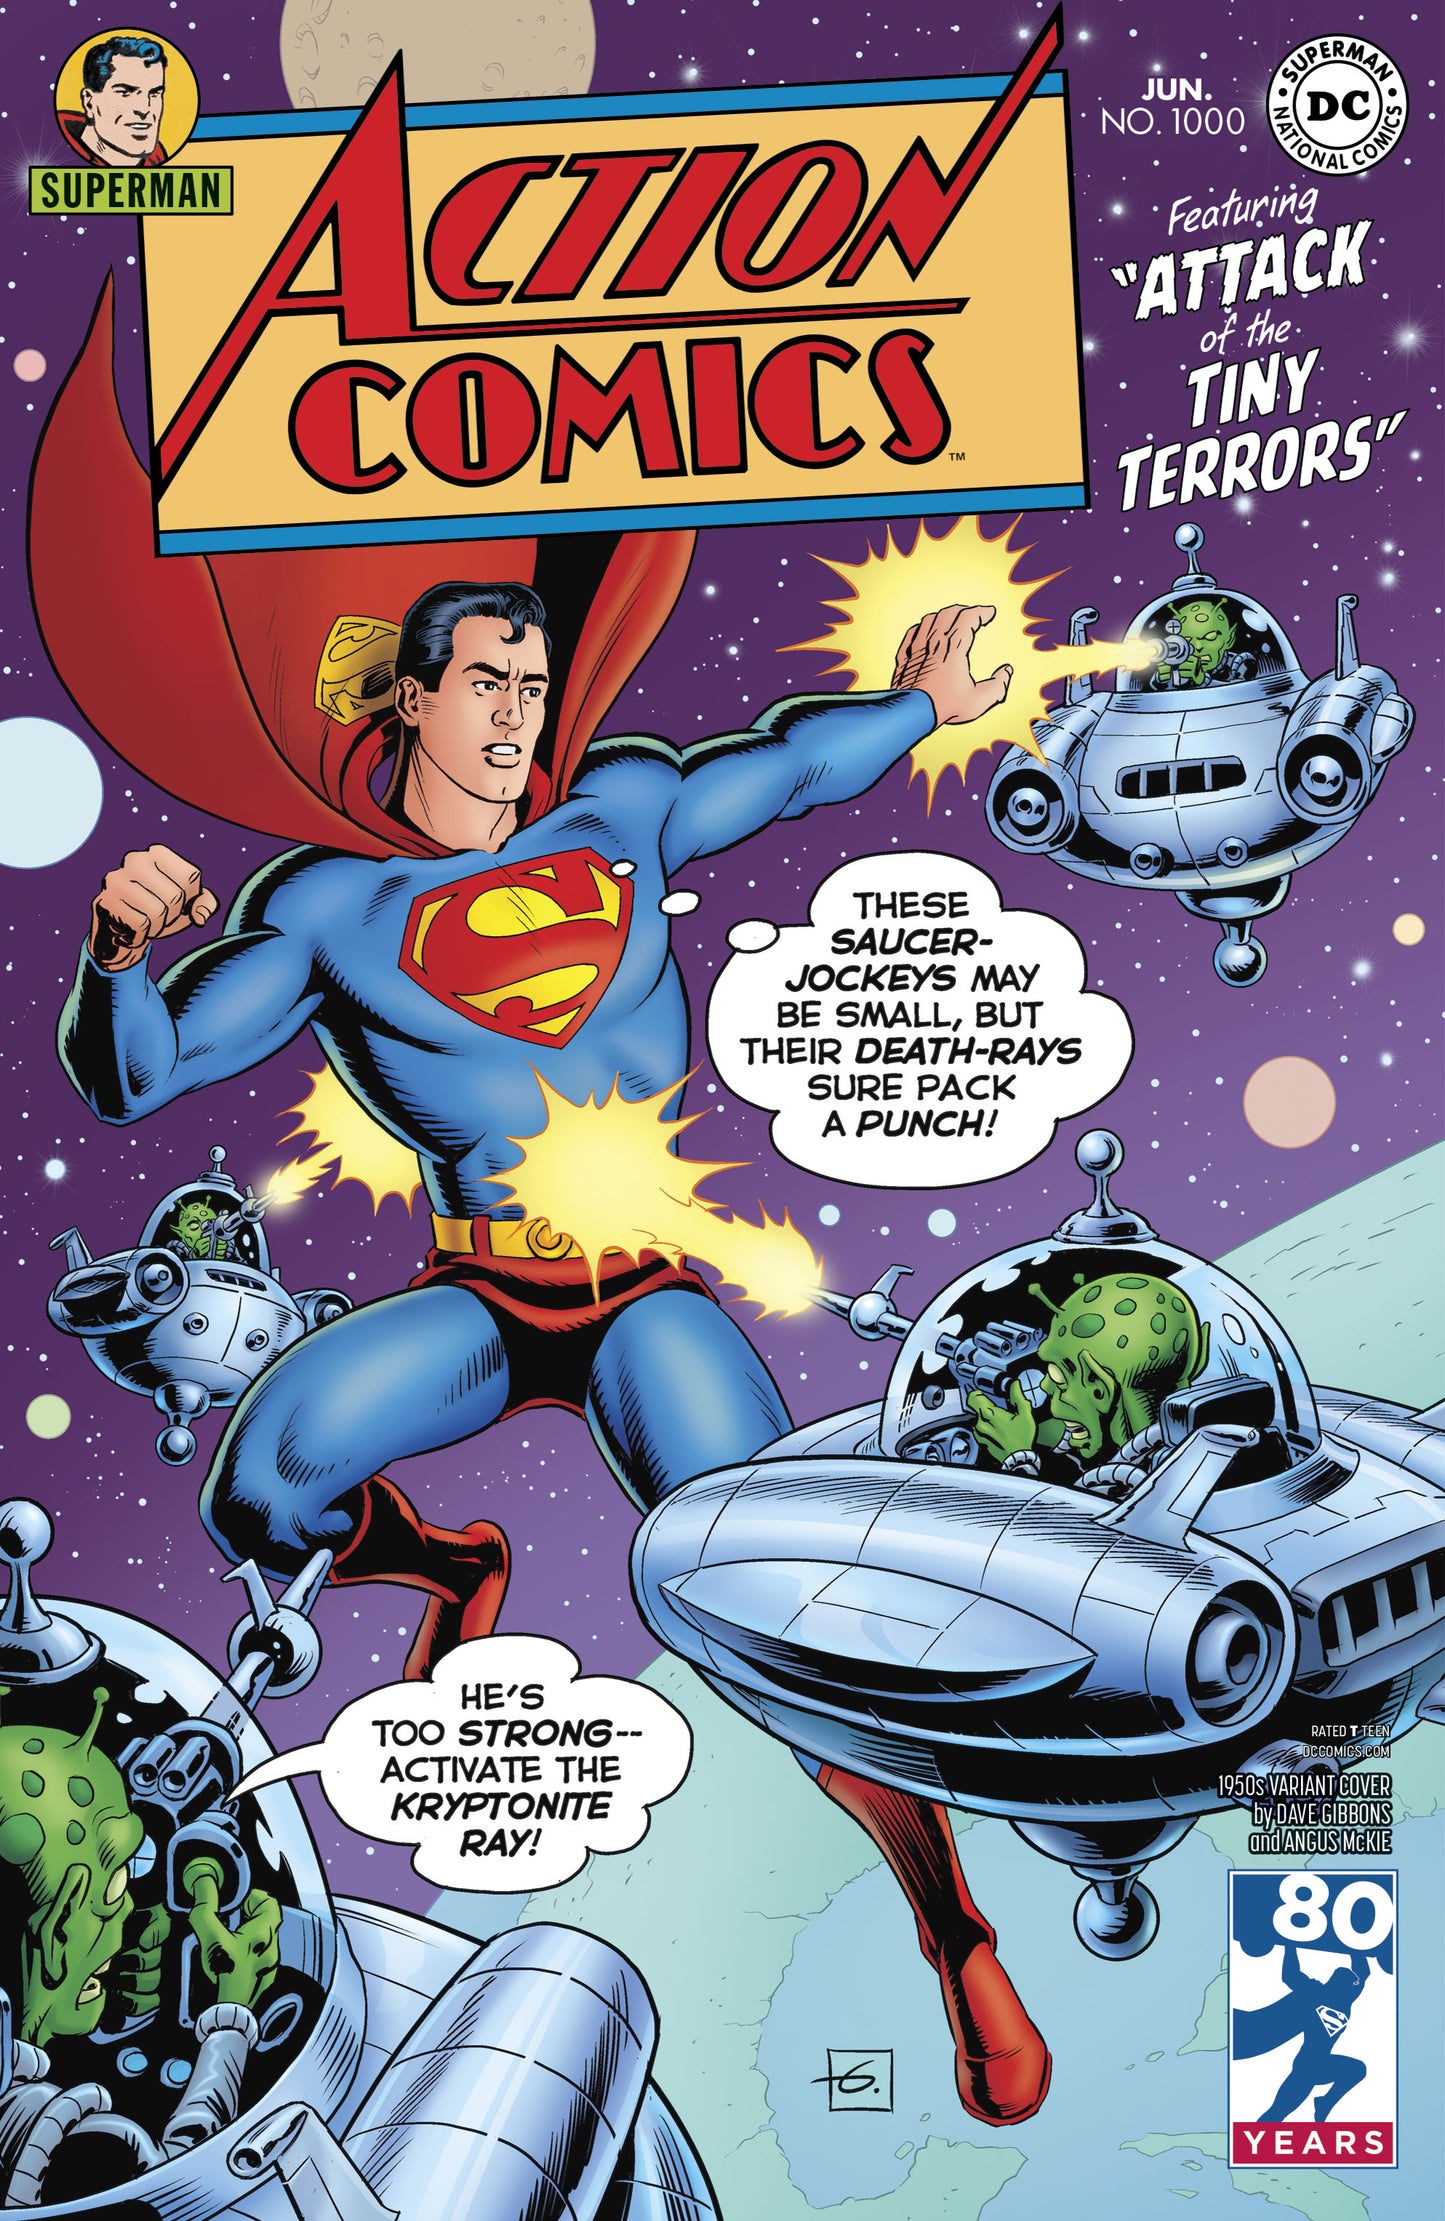 Action Comics (2016) #1000 1950s Variant